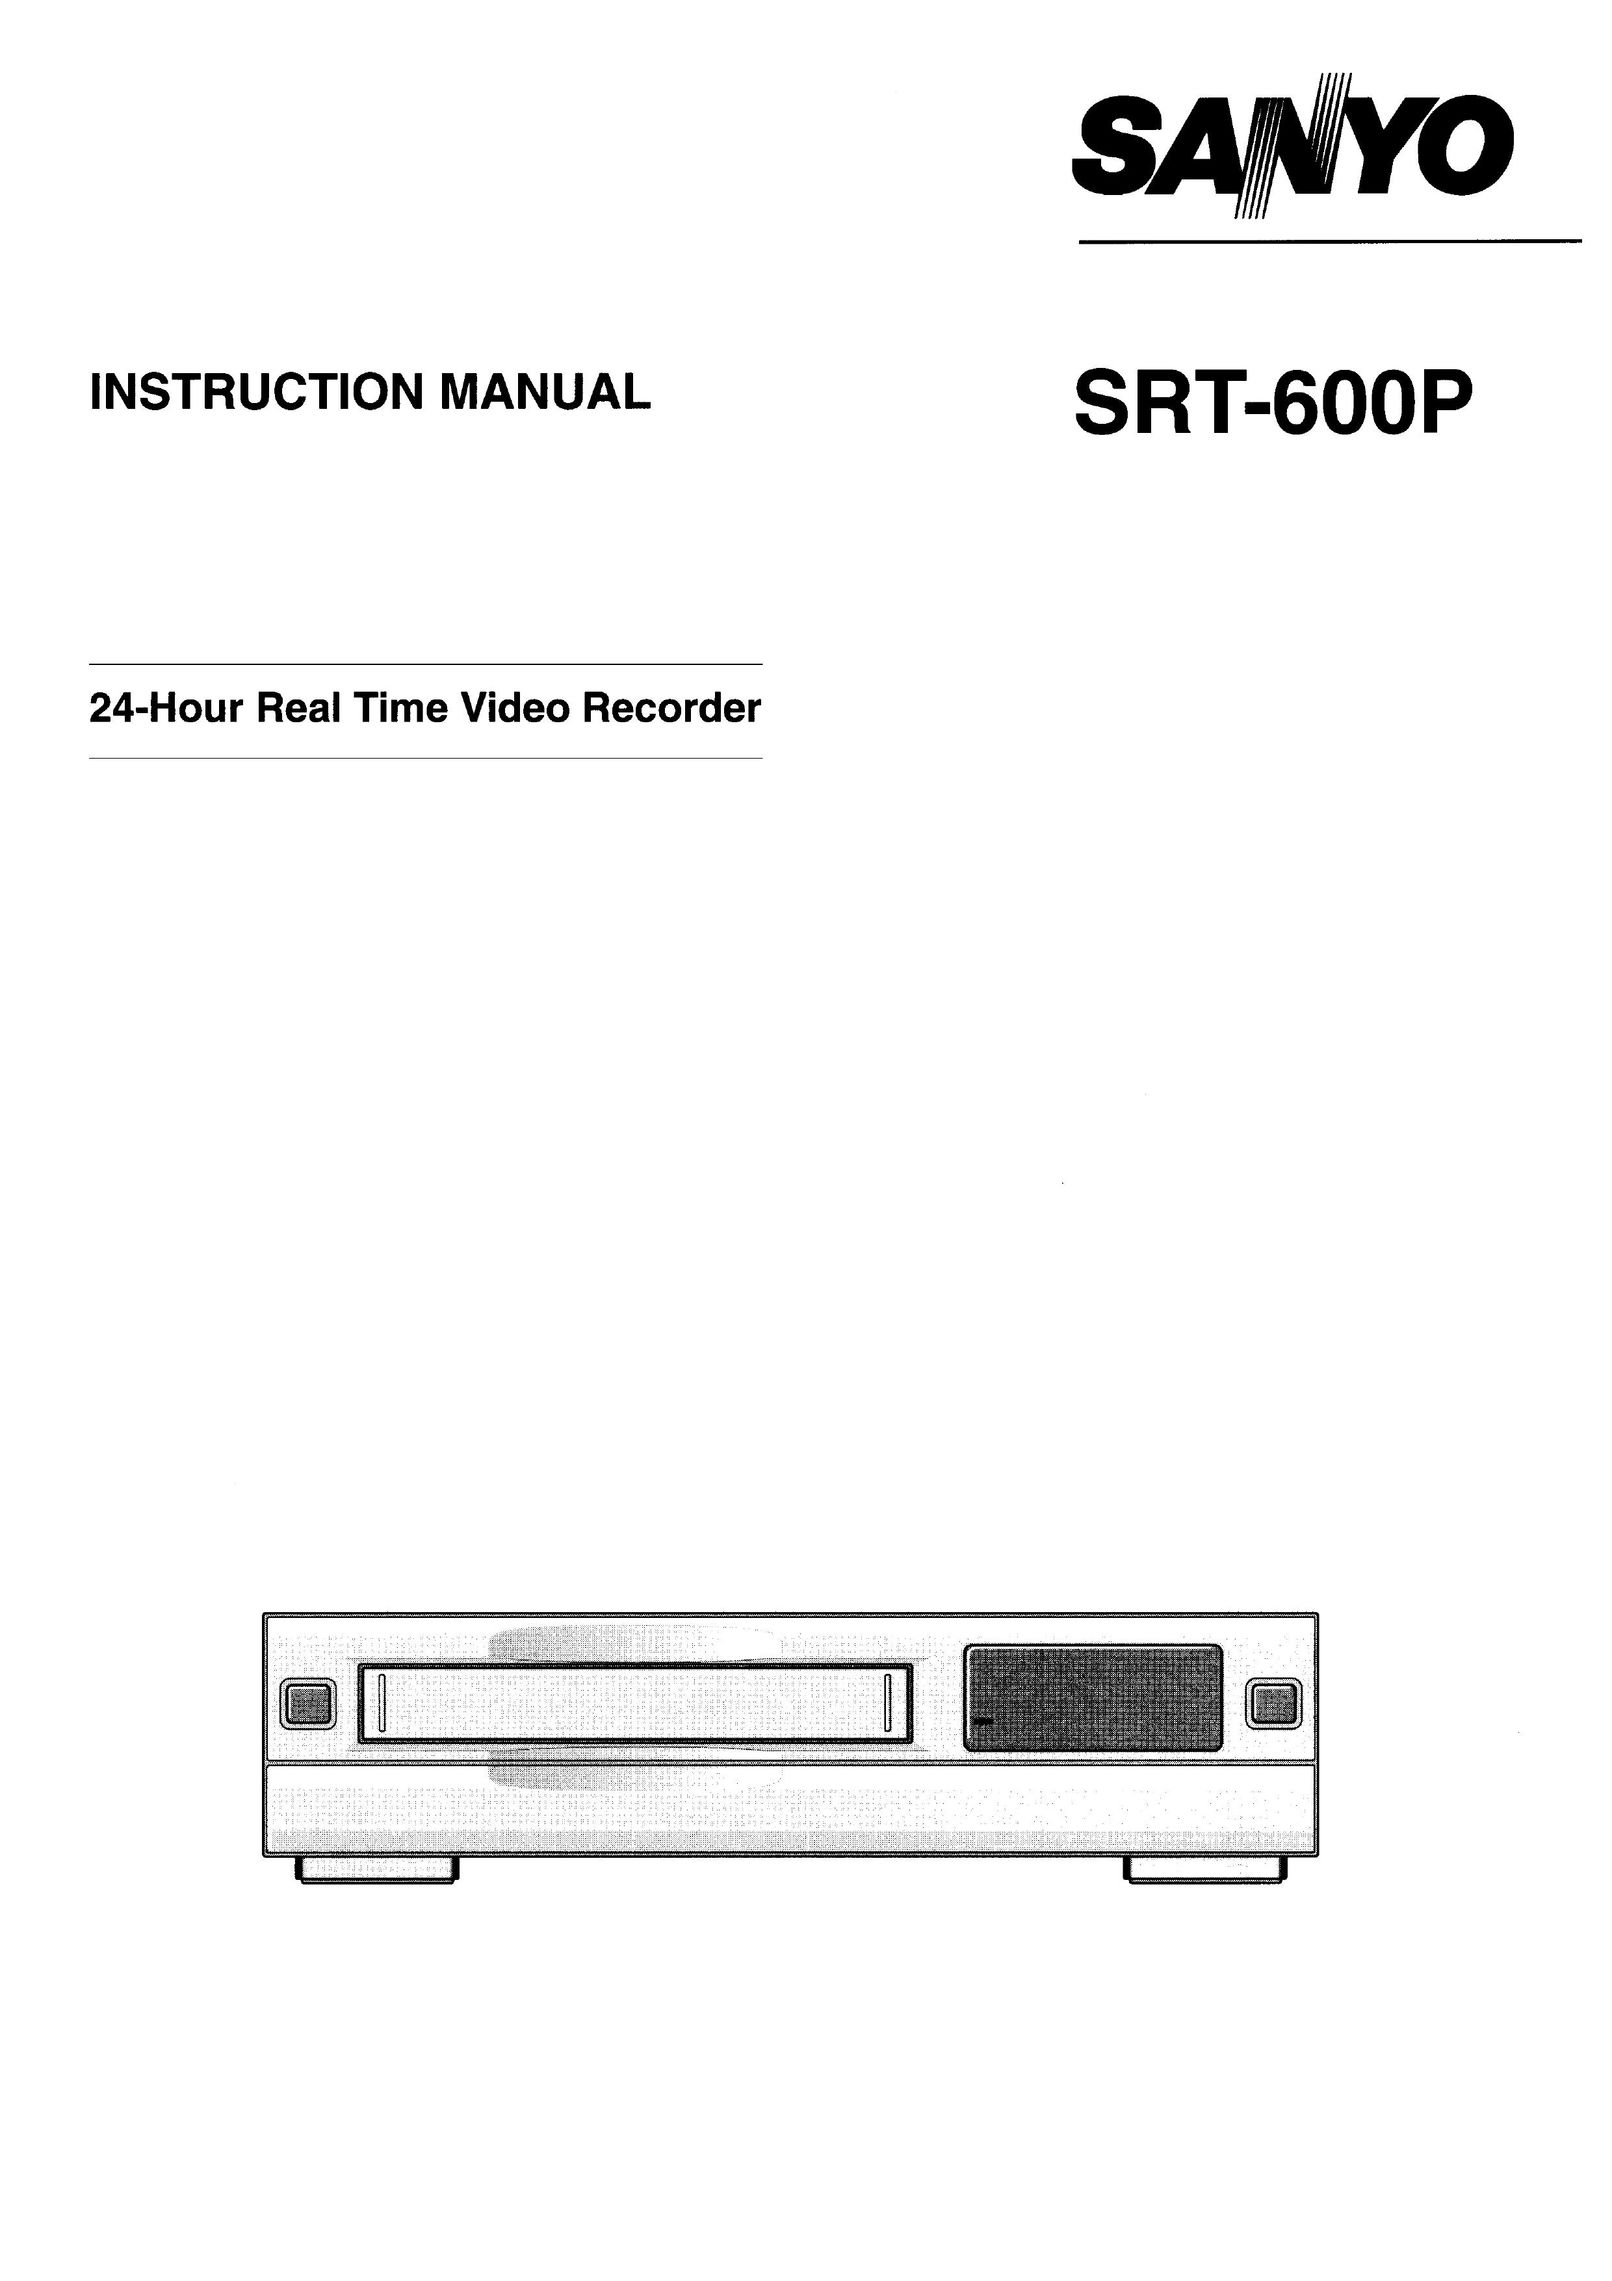 Sanyo SRT-600P DVR User Manual